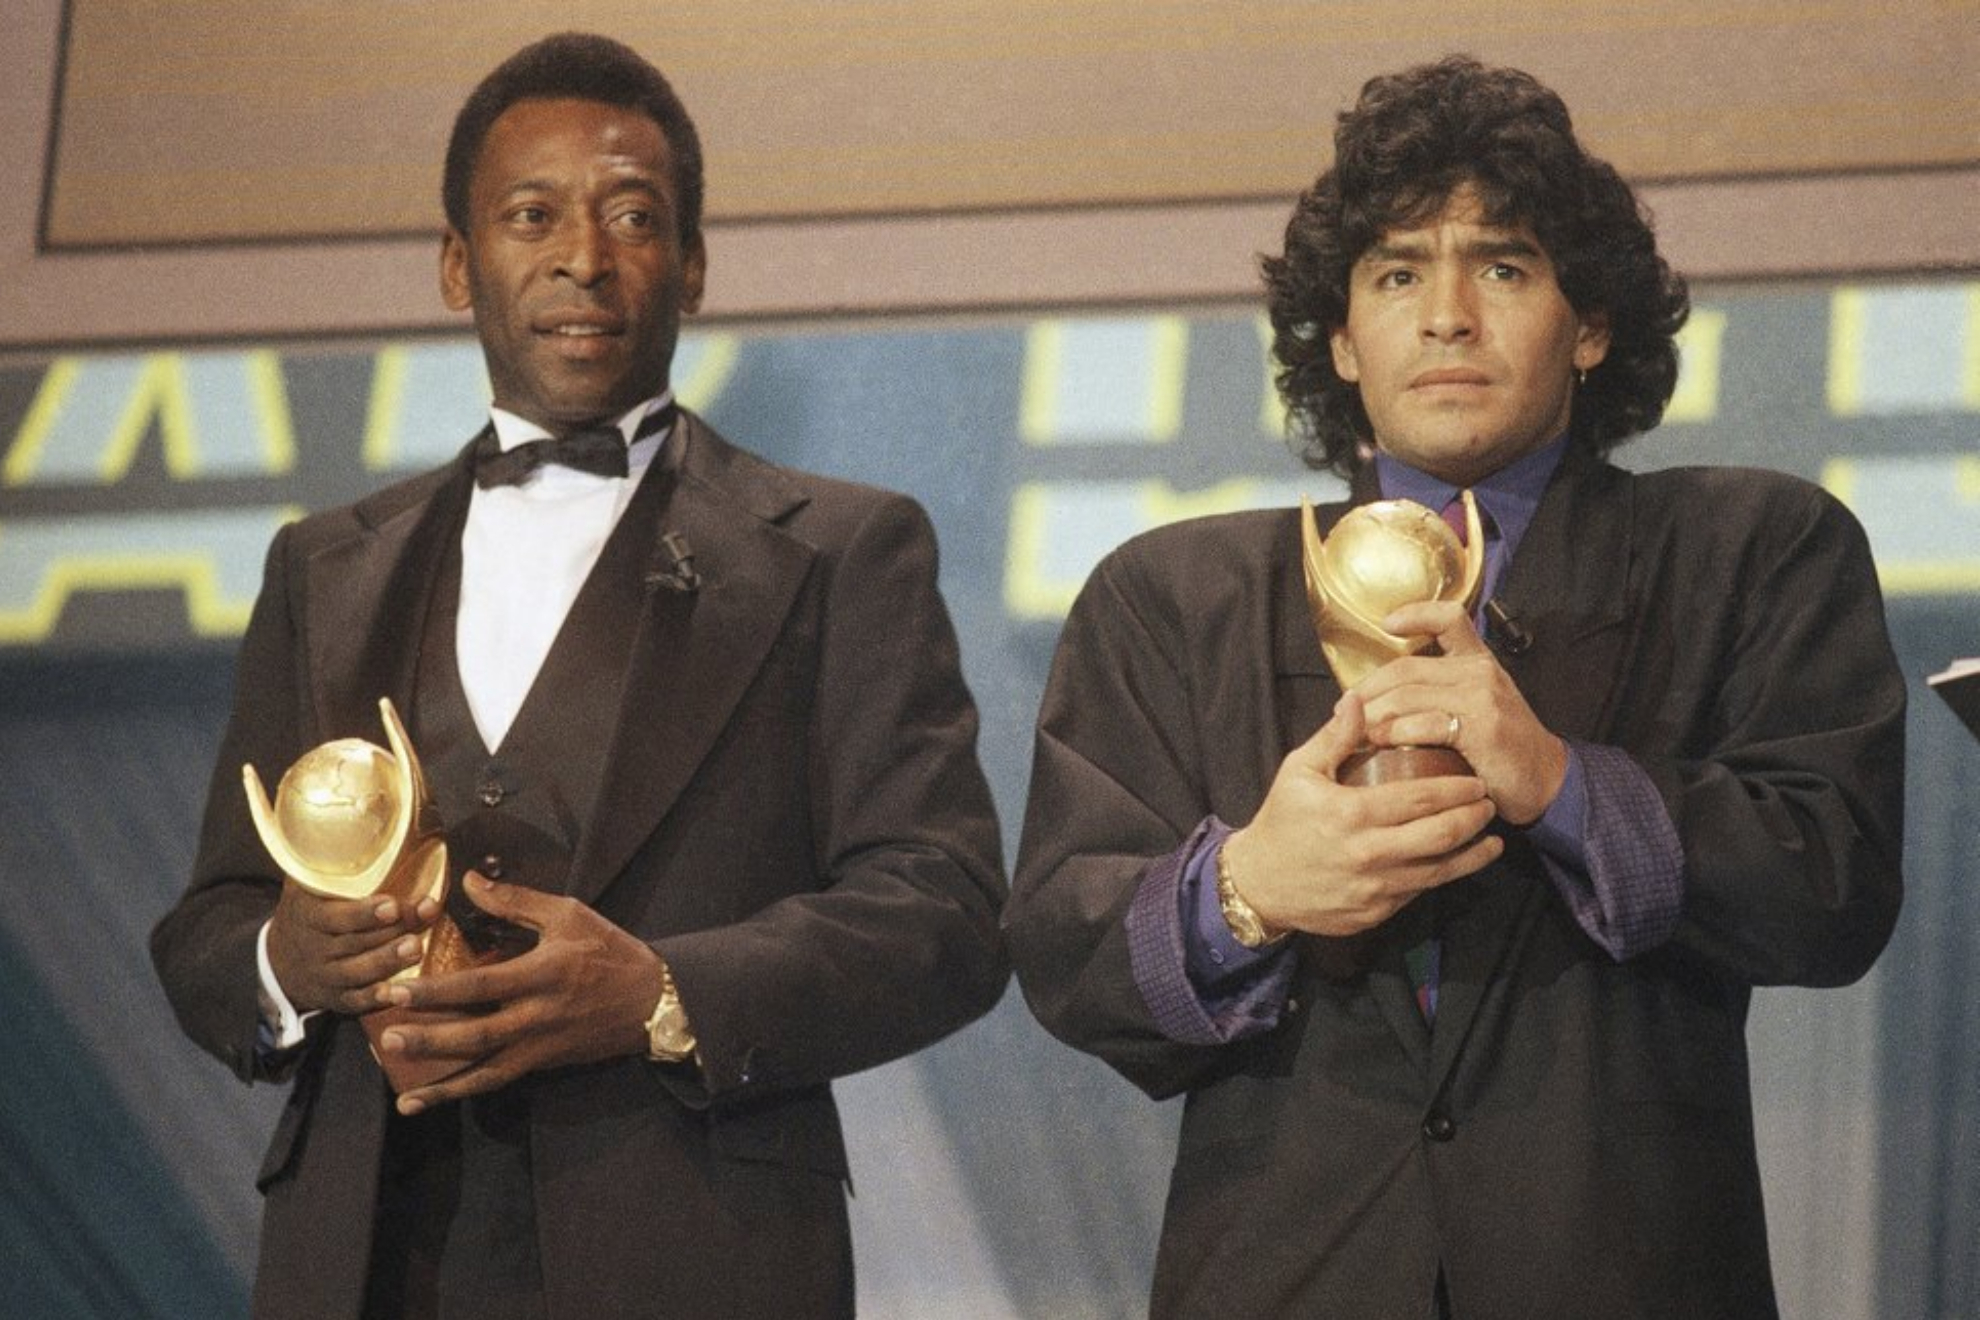 Pele and Maradona during an award ceremony in Italy.